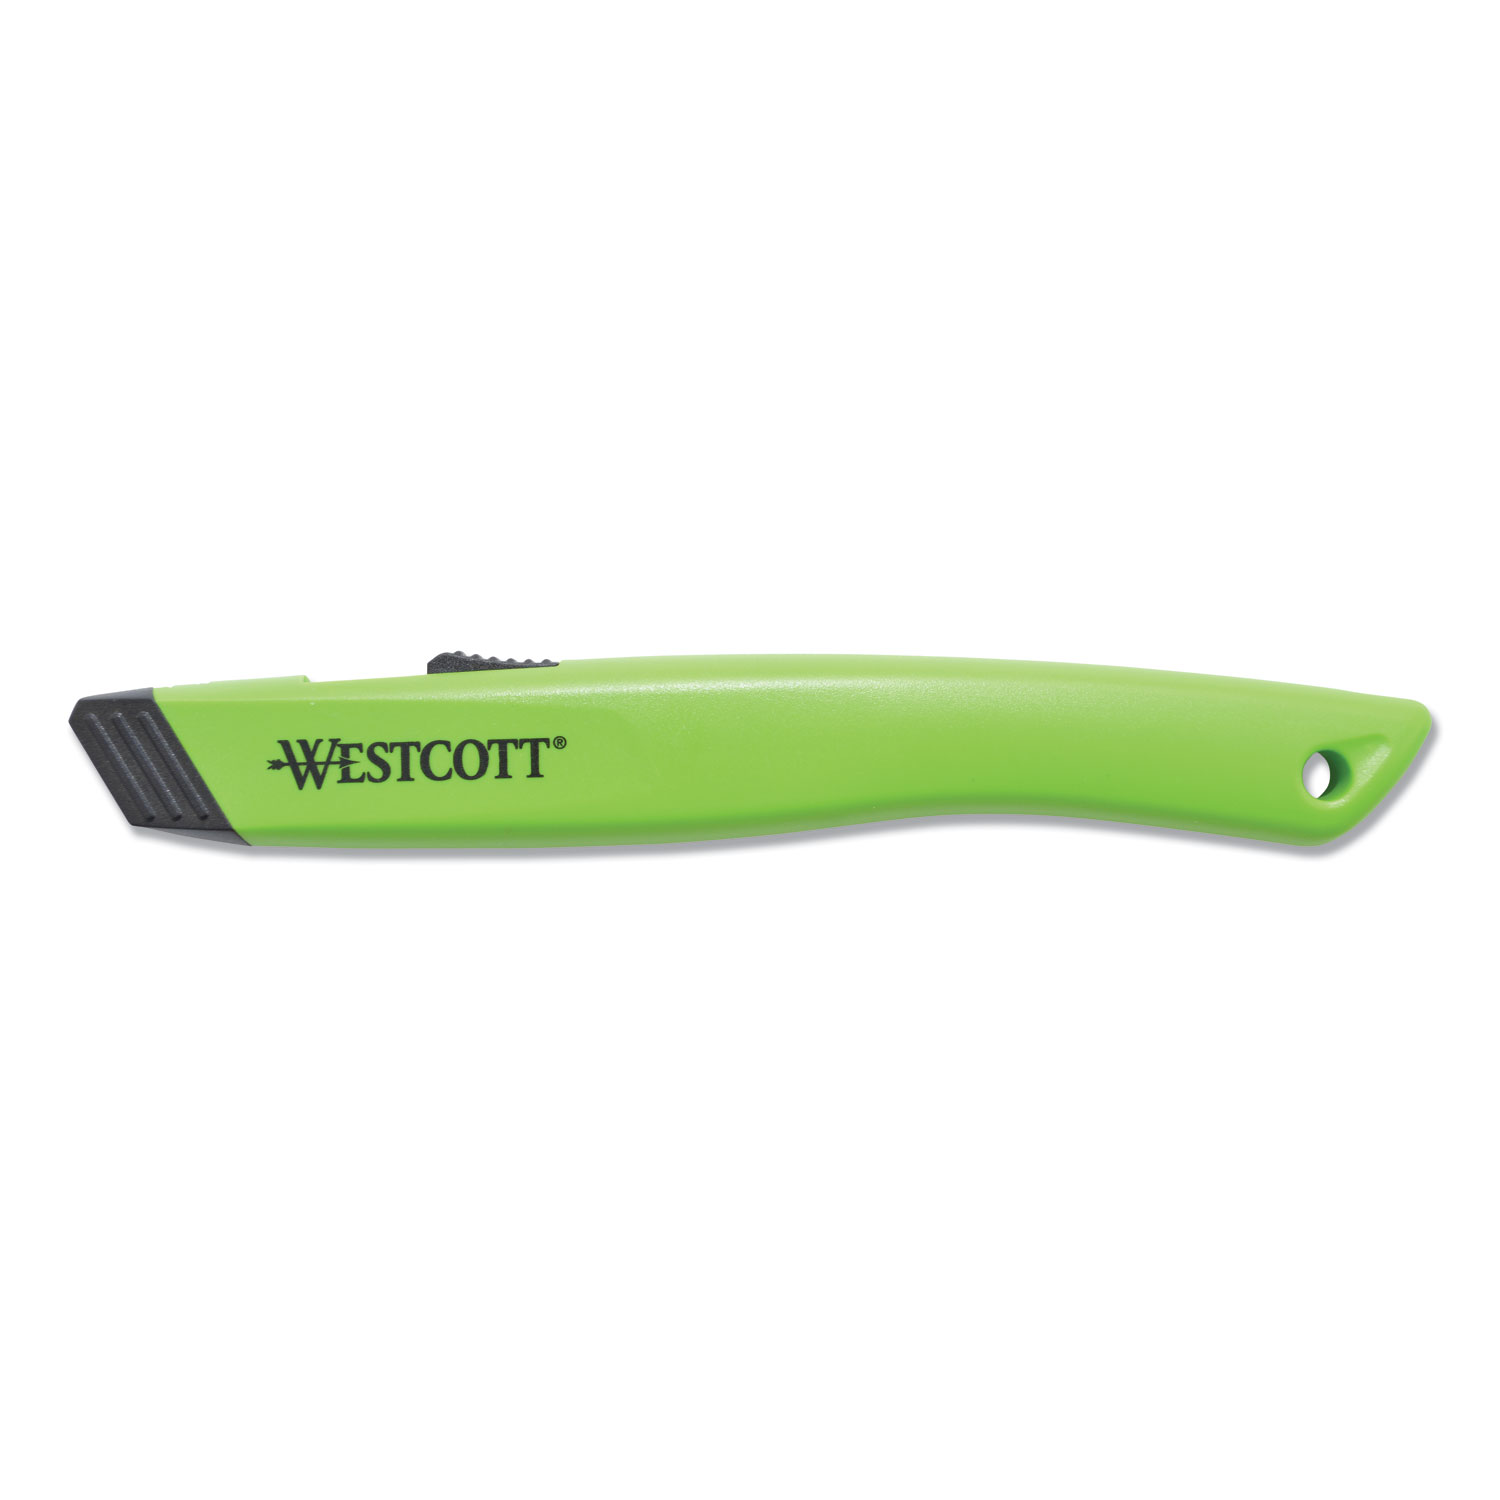  Westcott 16475 Safety Ceramic Blade Box Cutter, 5.5, Green (ACM16475) 